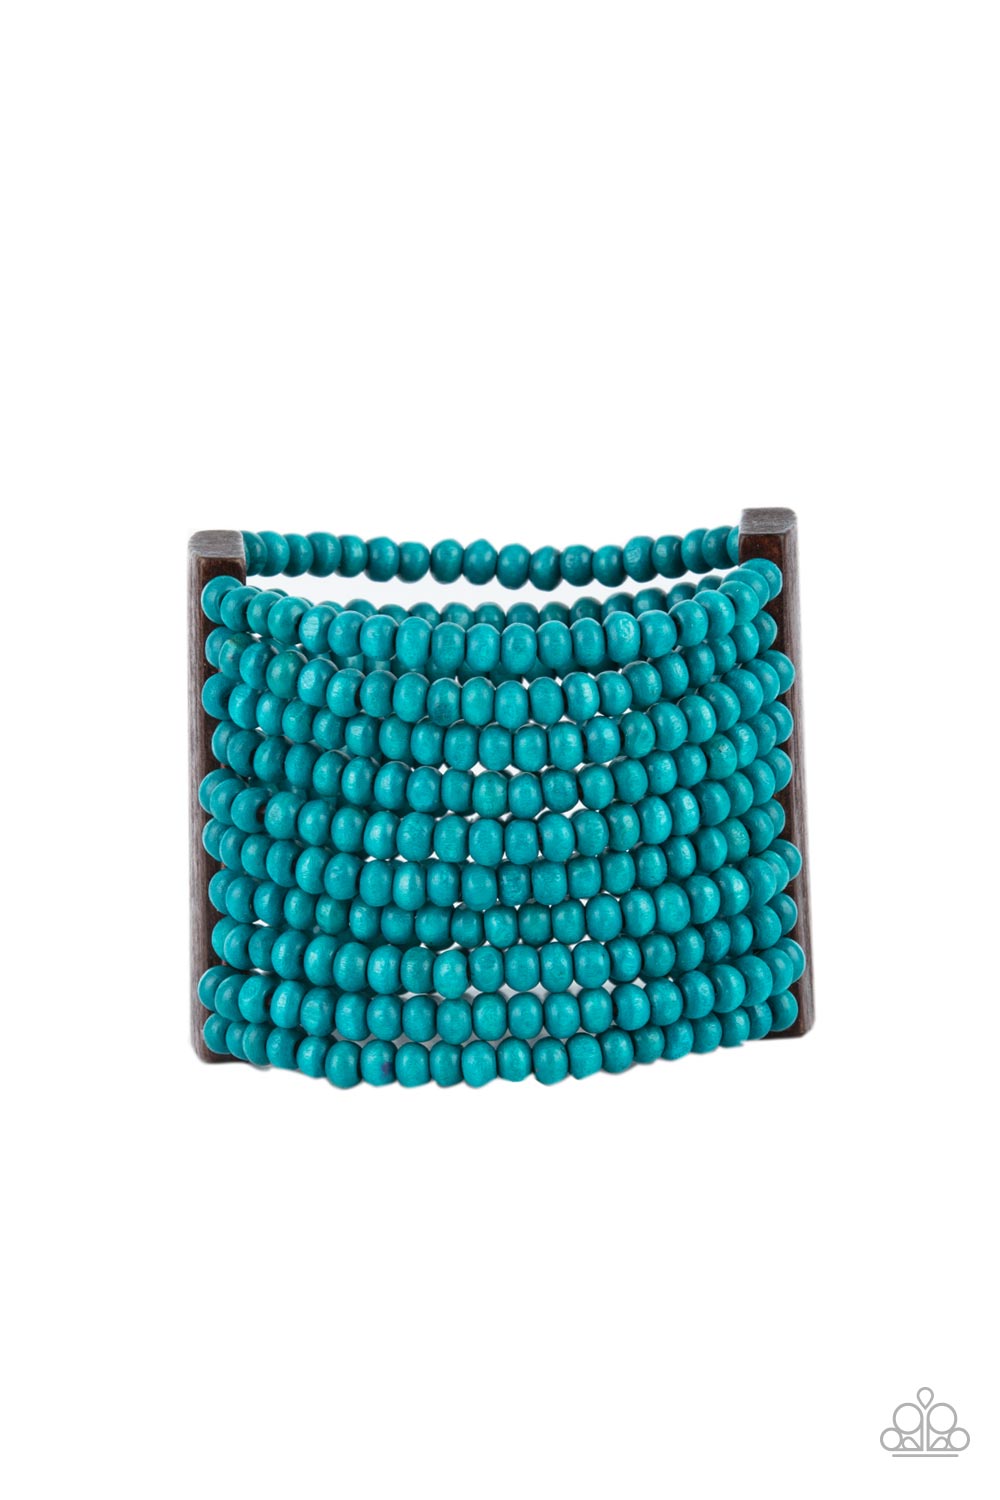 Waikiki Wonderland Blue Wood Bracelet - Paparazzi Accessories- lightbox - CarasShop.com - $5 Jewelry by Cara Jewels